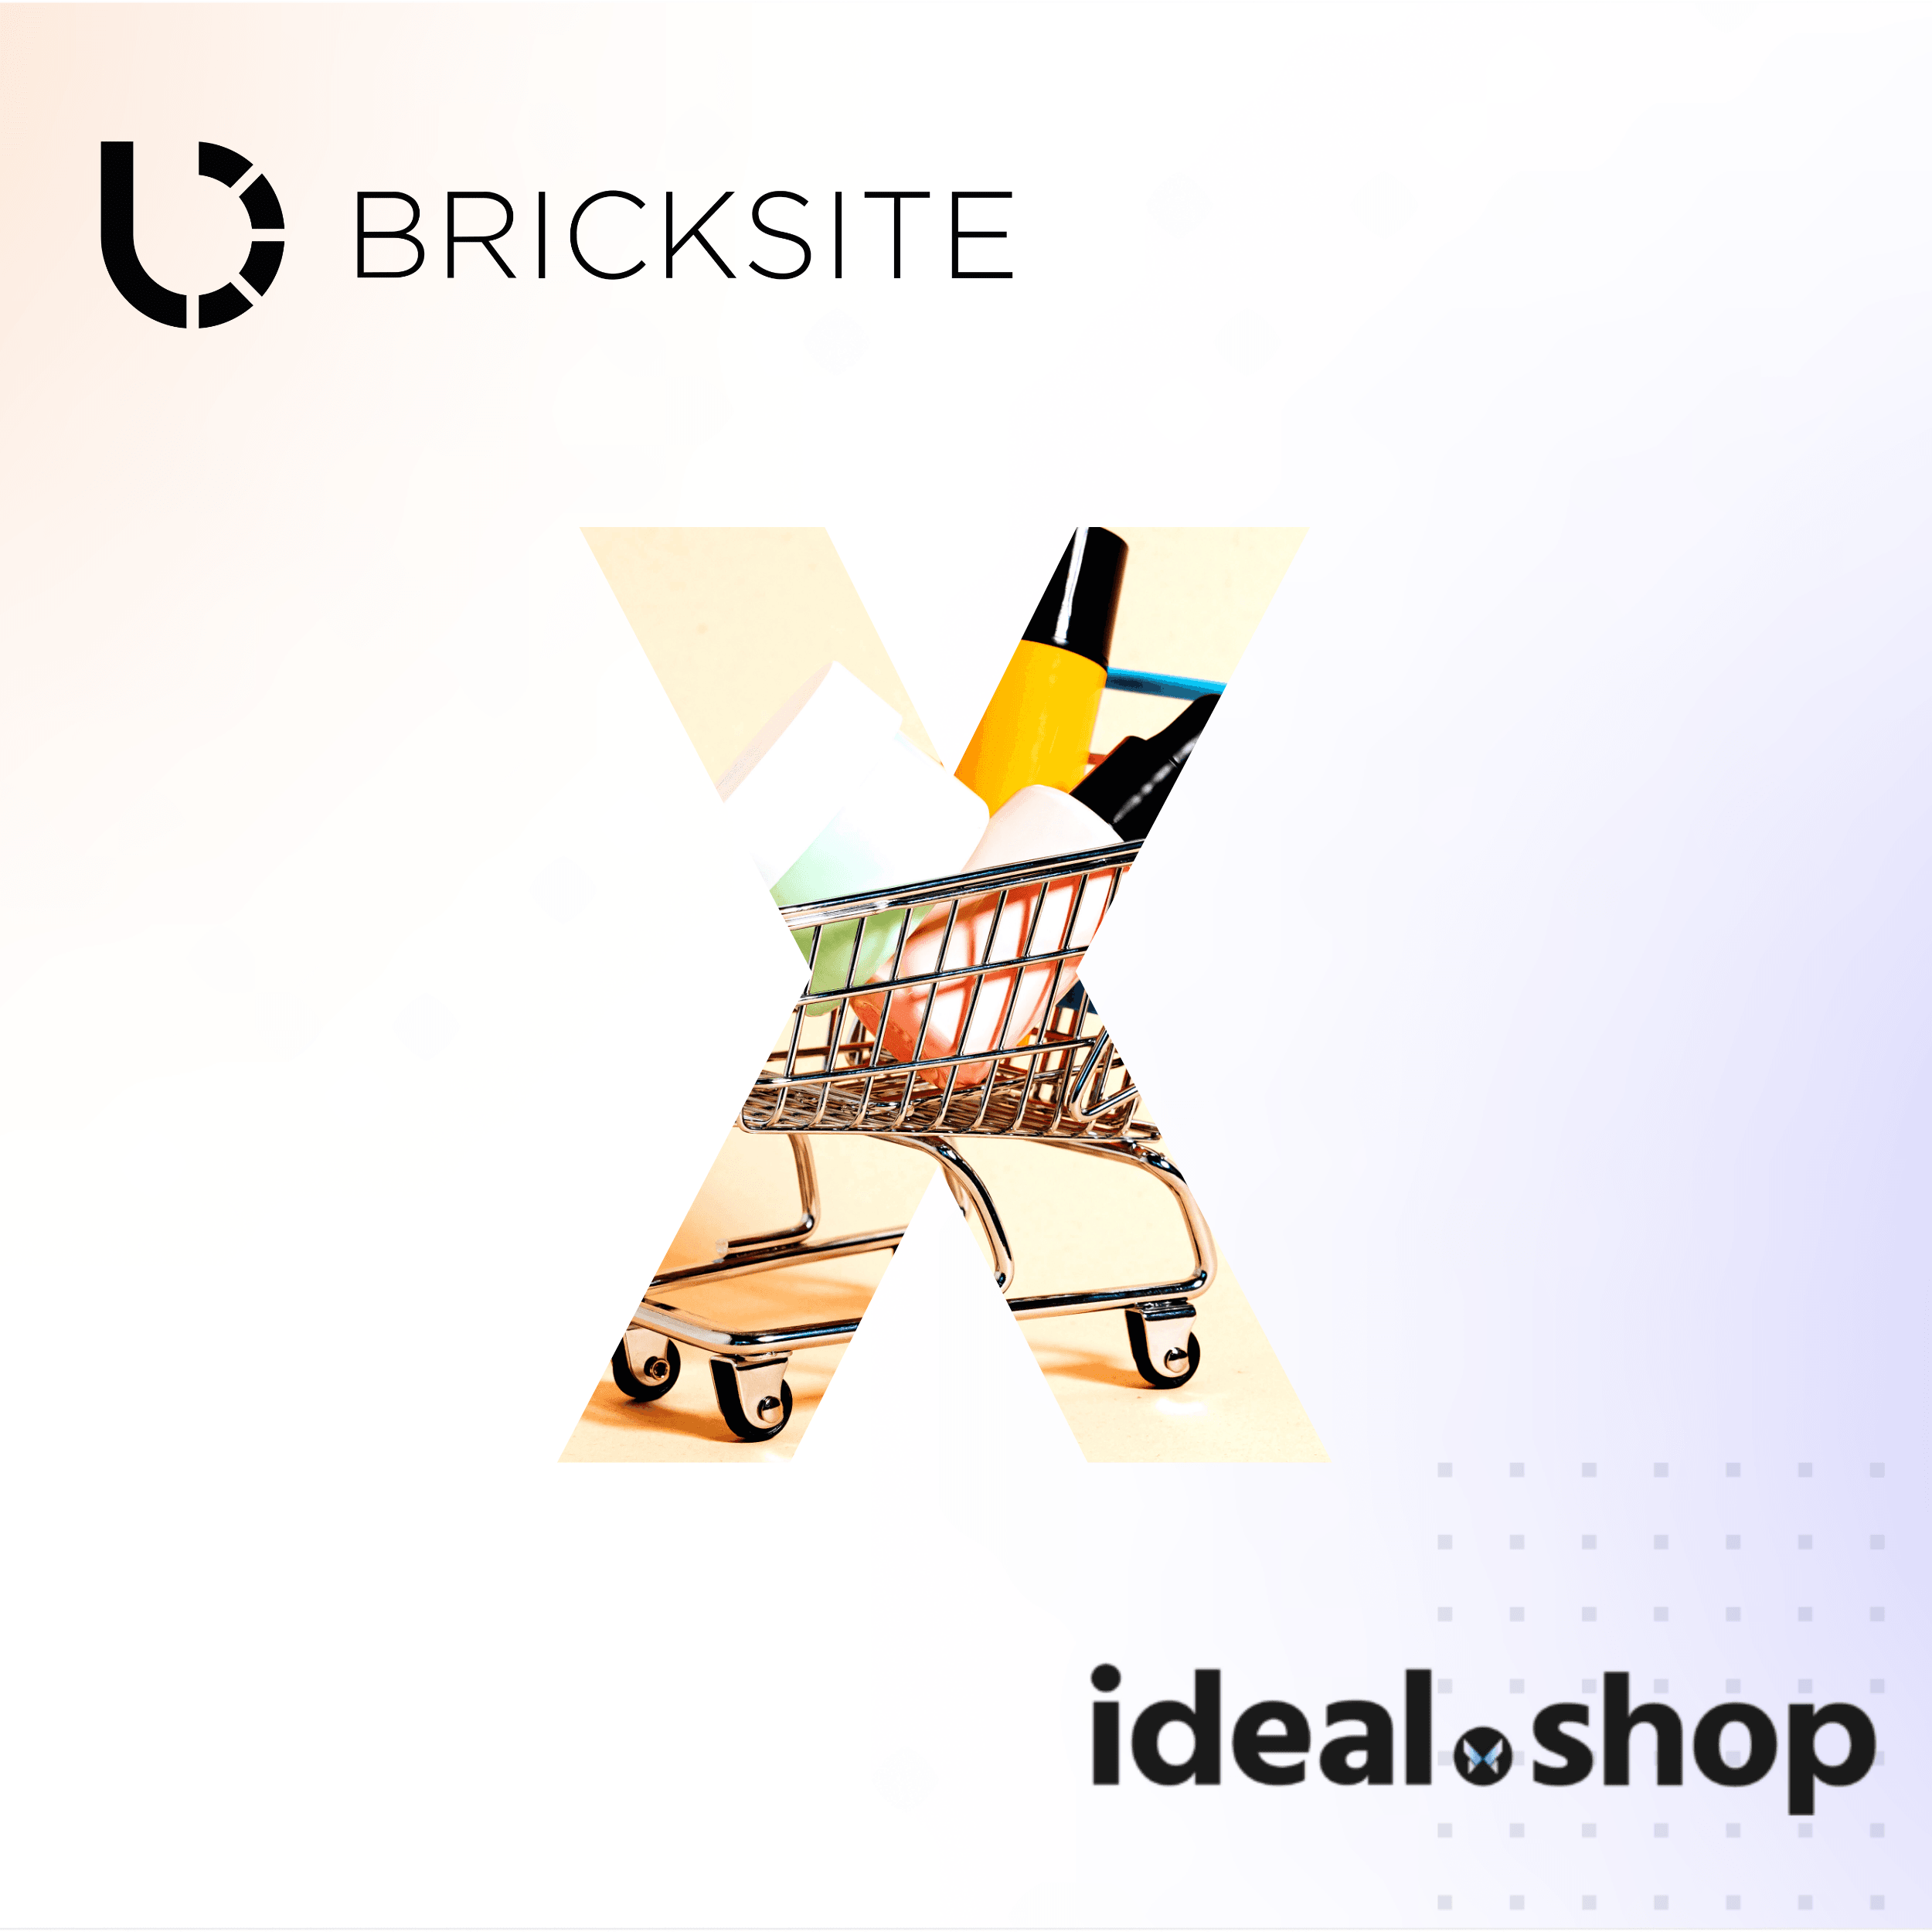 bricksite.dk x ideal.shop